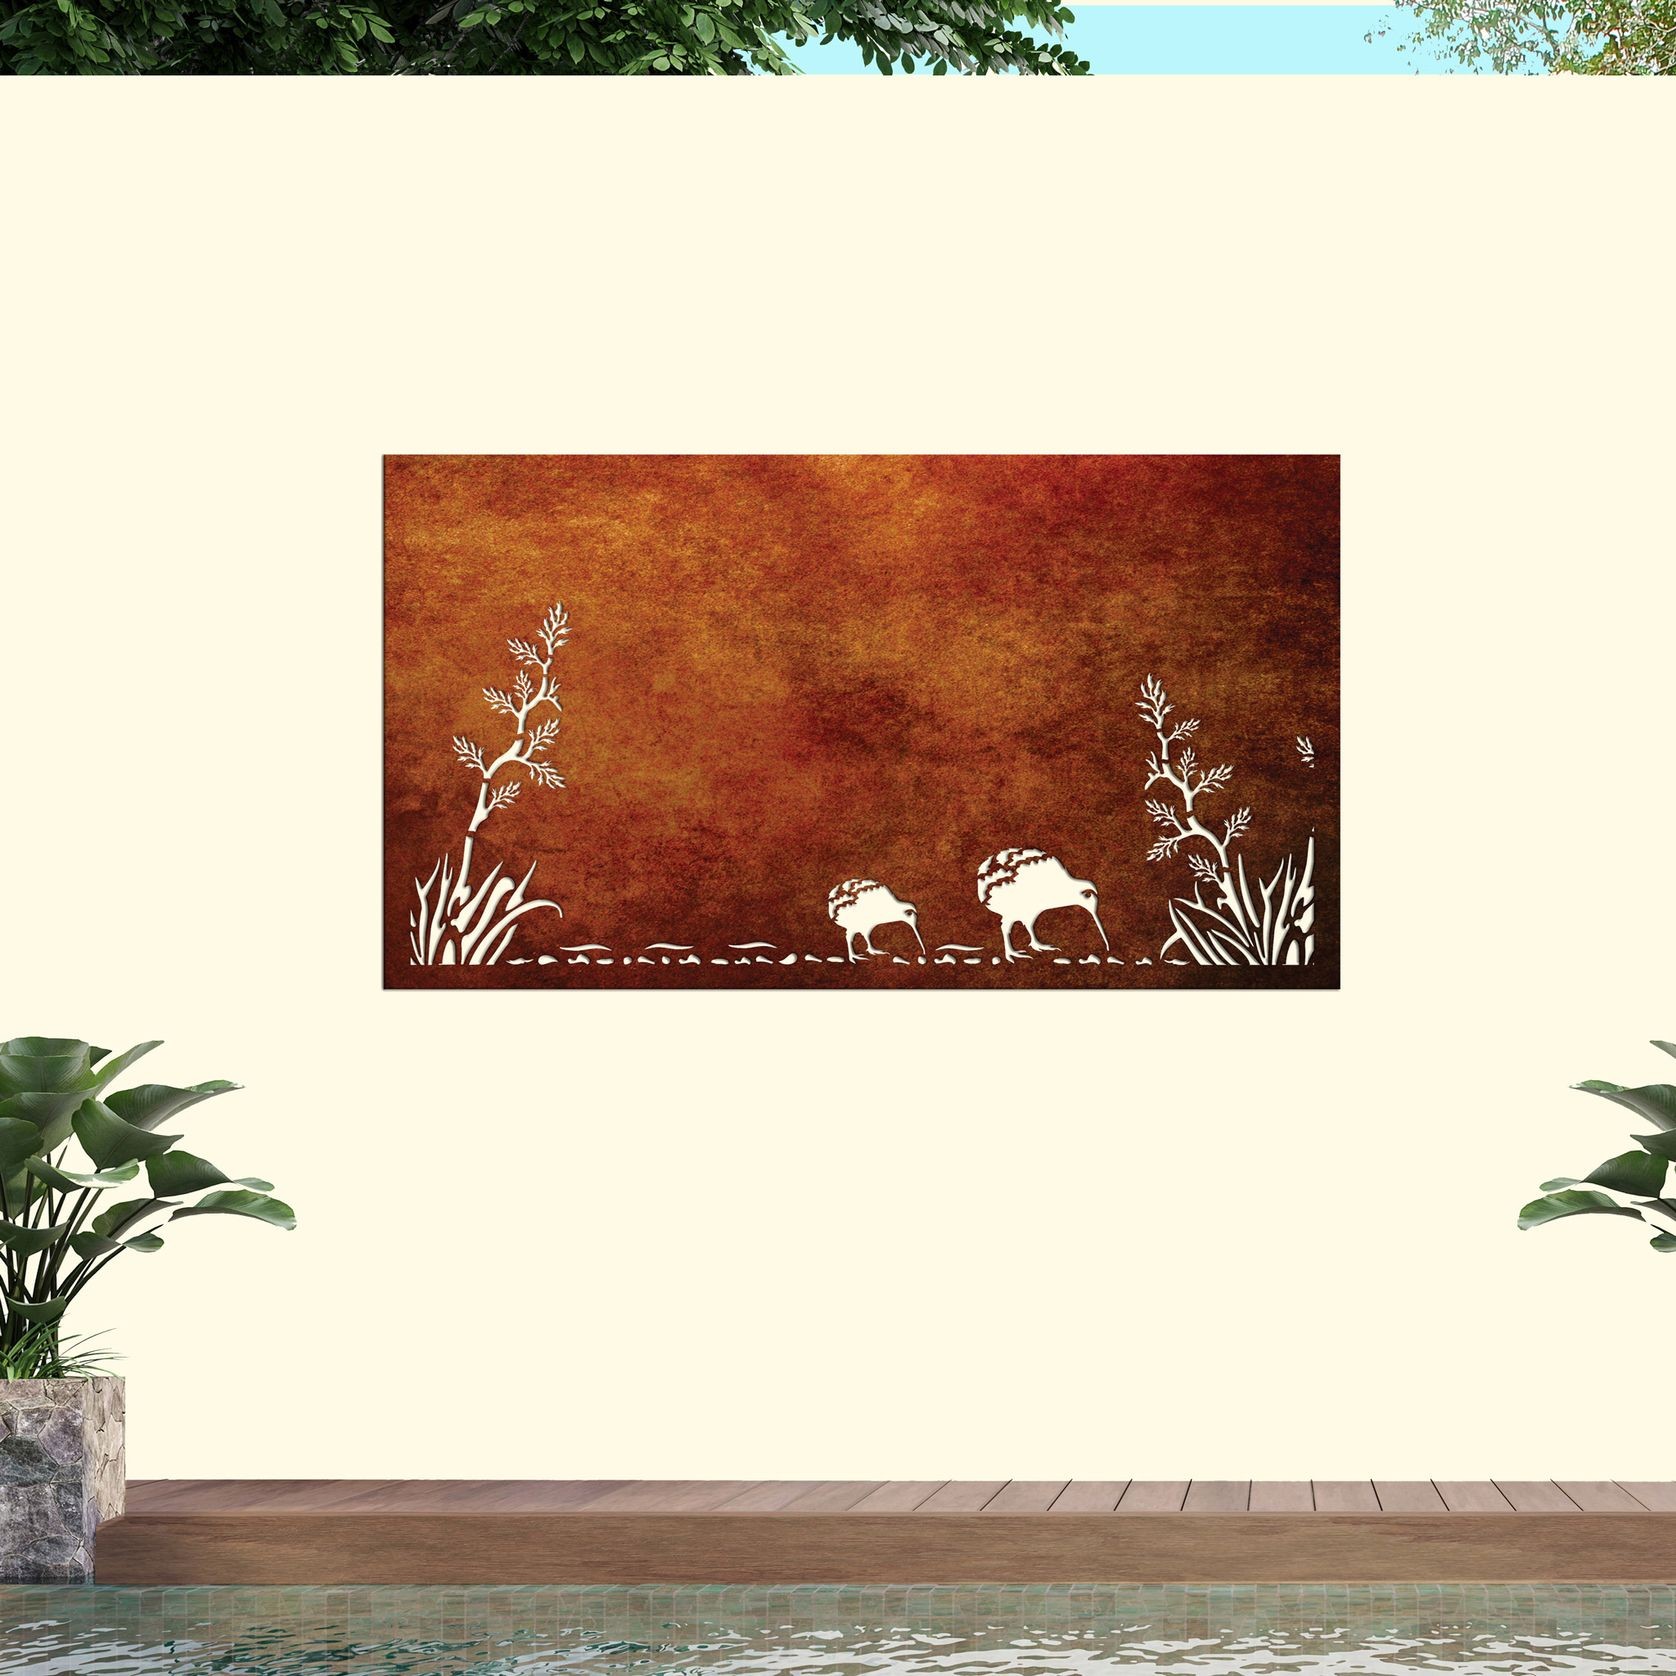 Flex With Kiwi - Decorative Balustrade gallery detail image